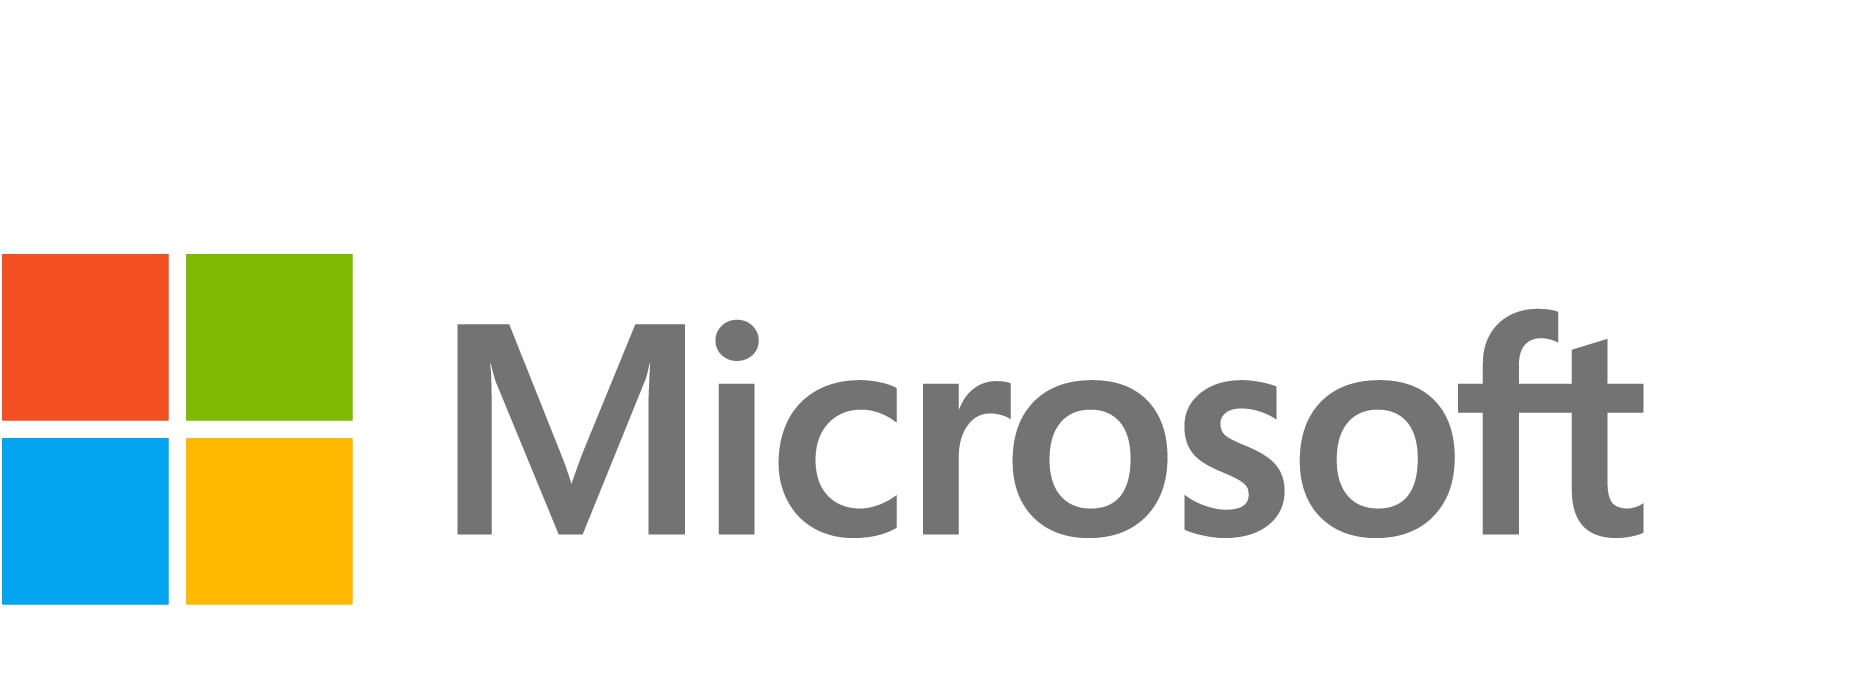 Microsoft Dynamics 365 - subscription license - 1 user